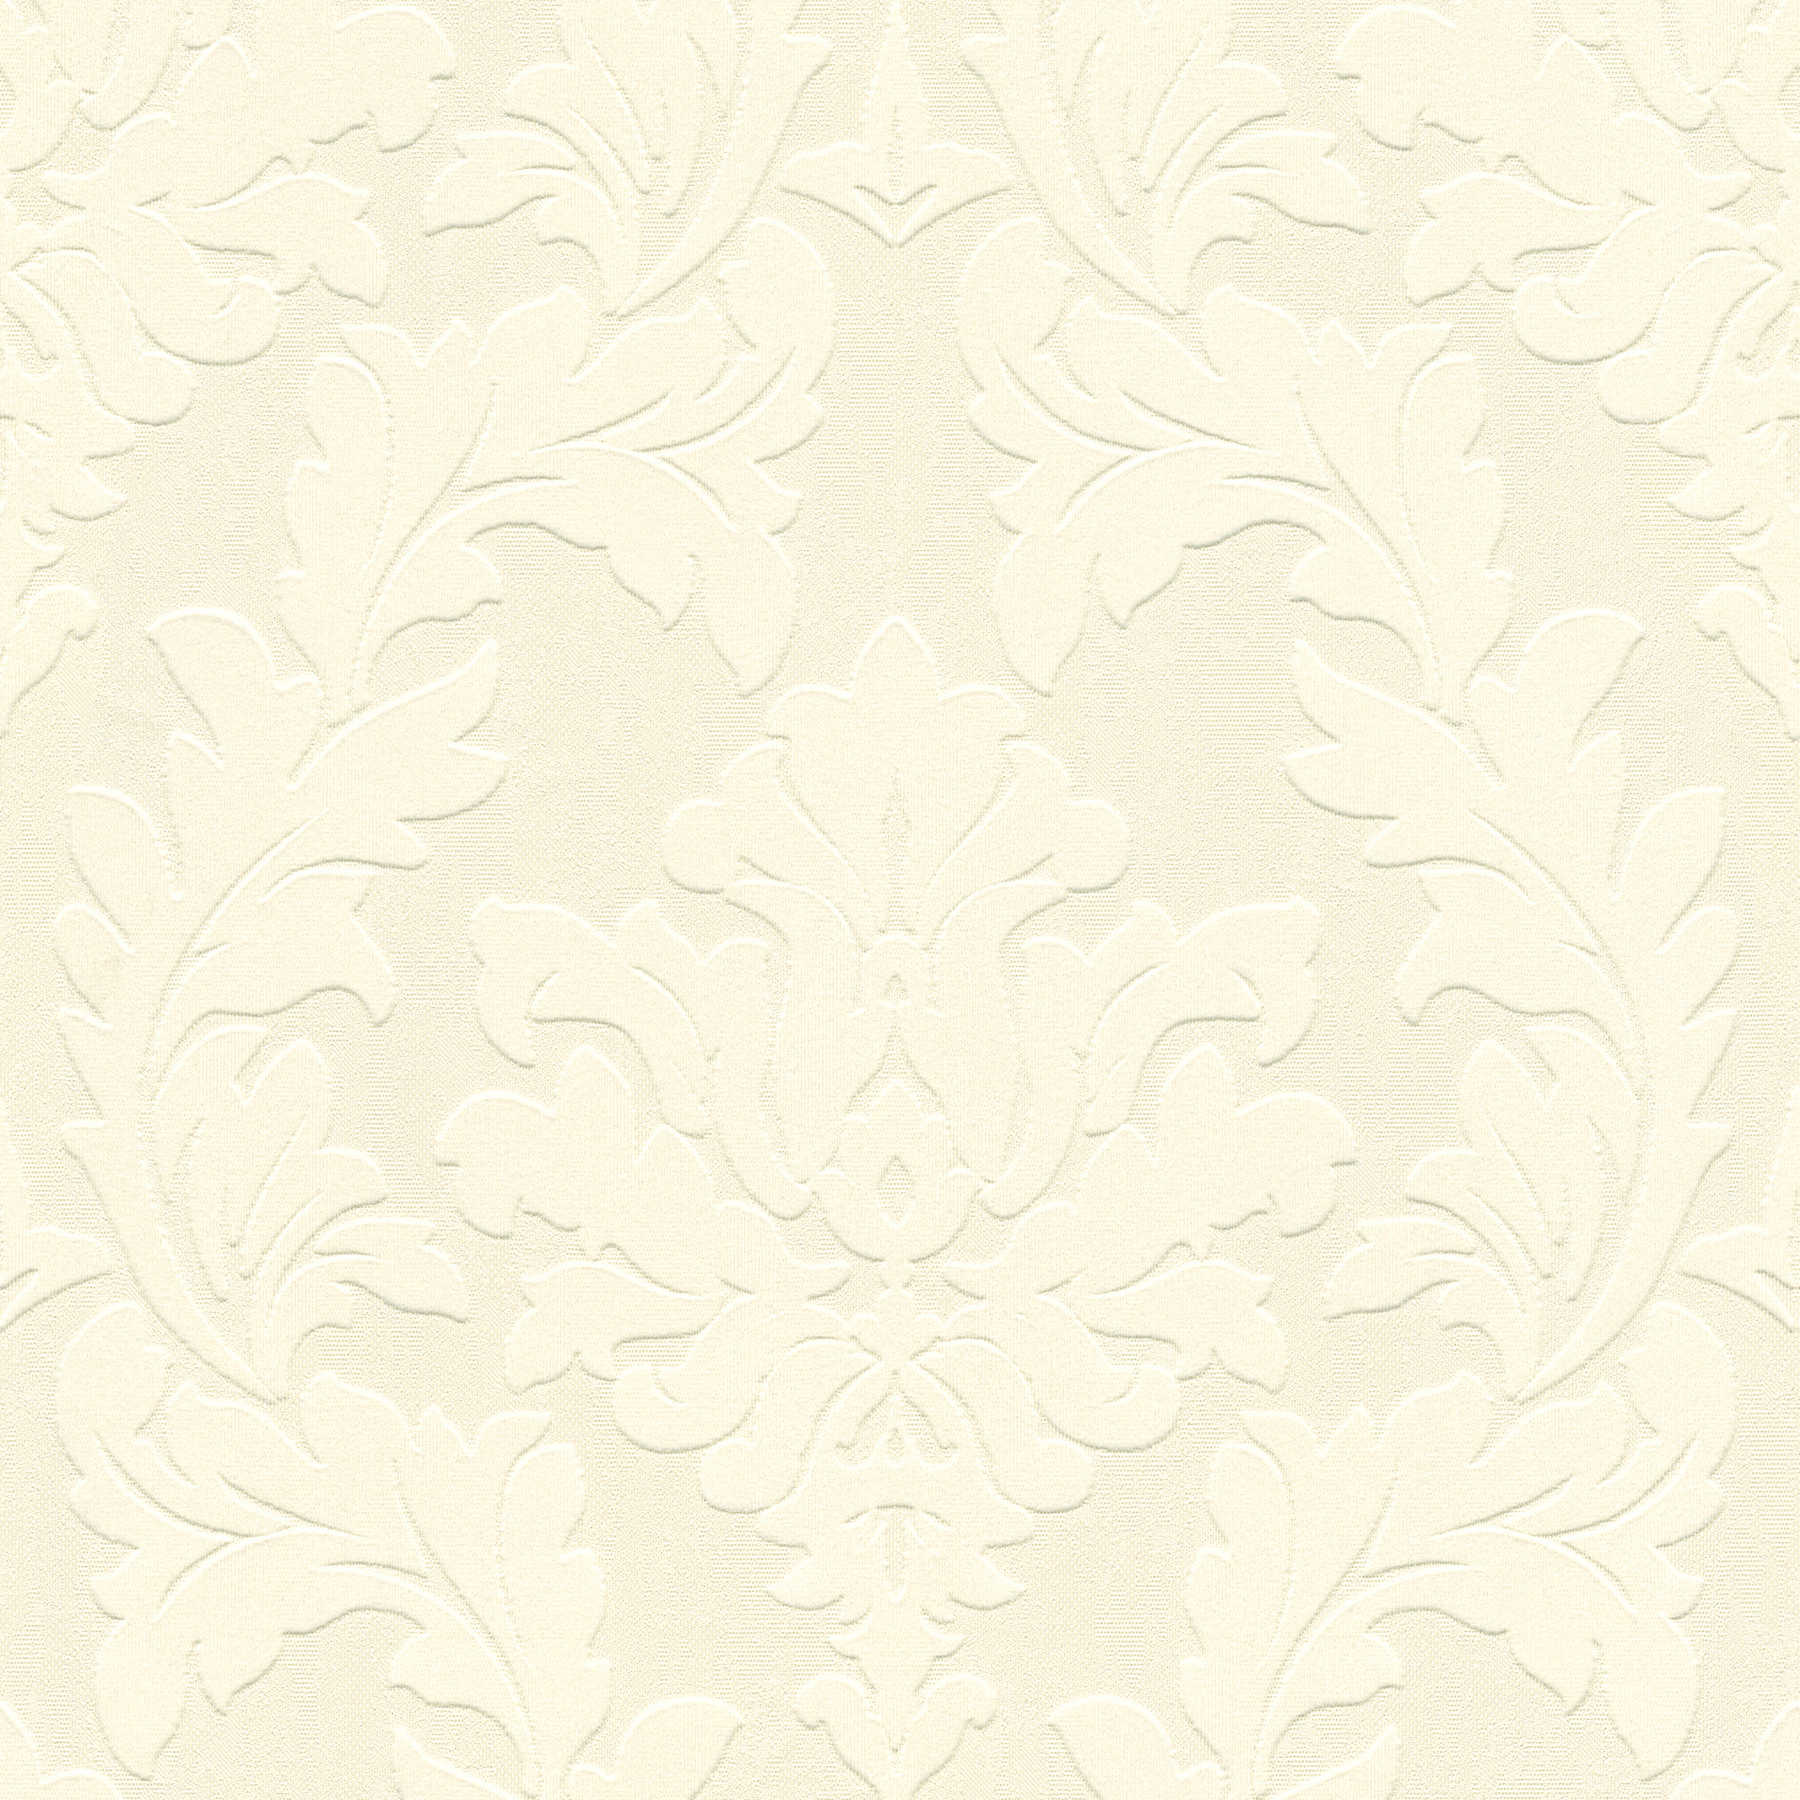 Baroque wallpaper with metallic effect & texture design - cream
